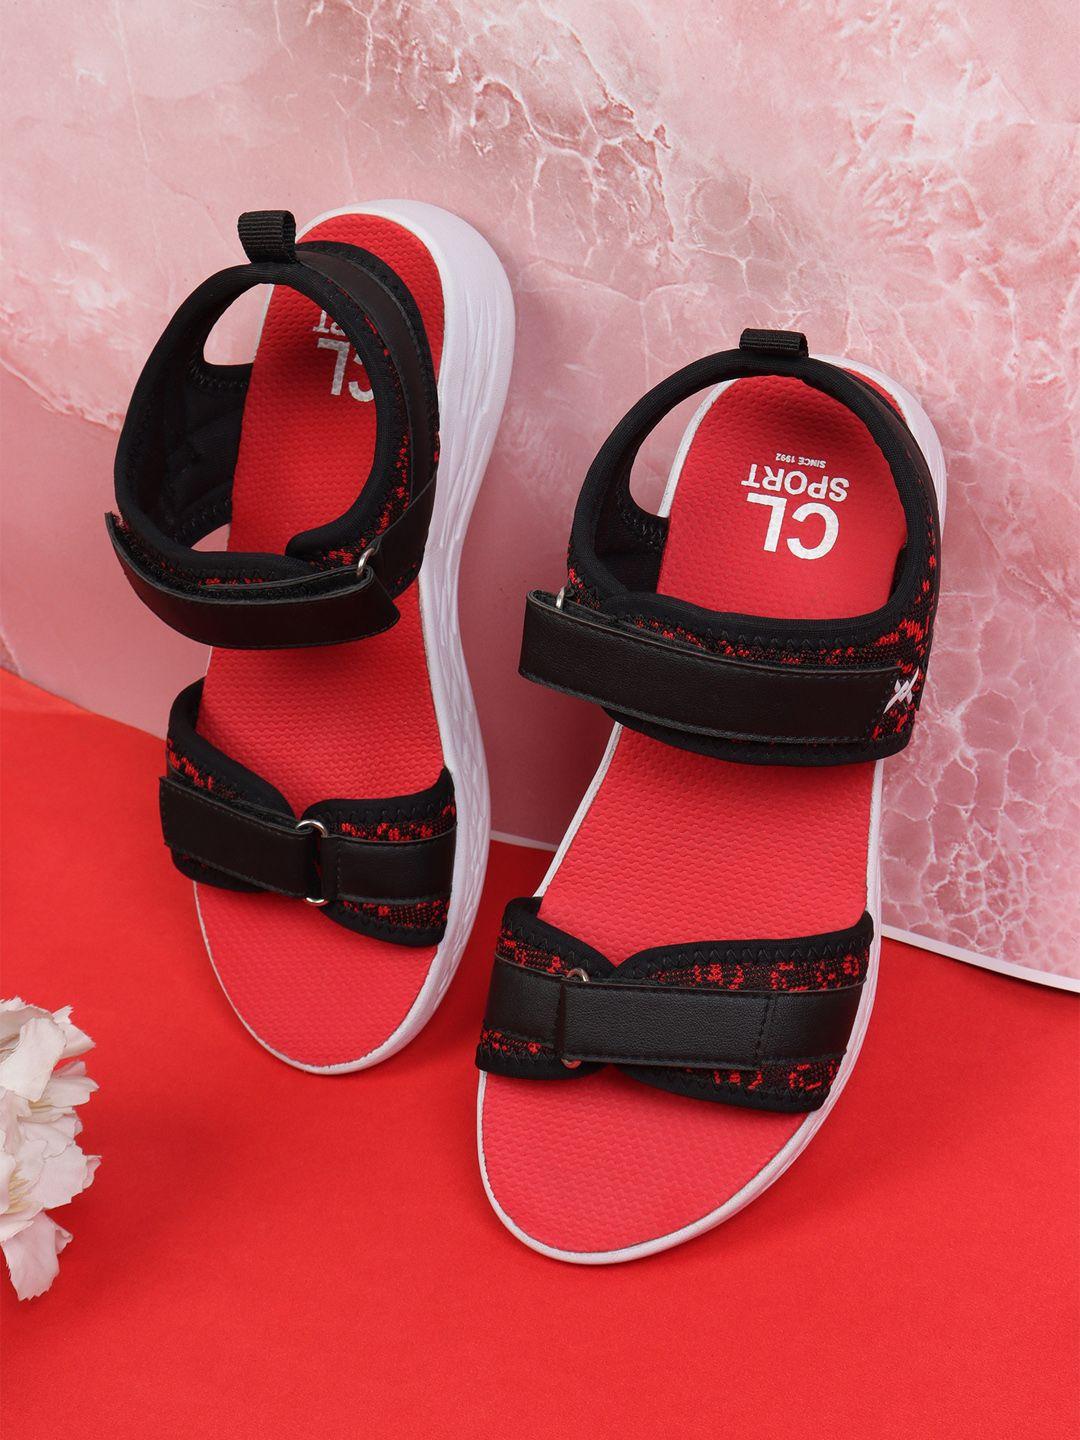 carlton-london-sports-women-red-&-black-solid-sports-sandals